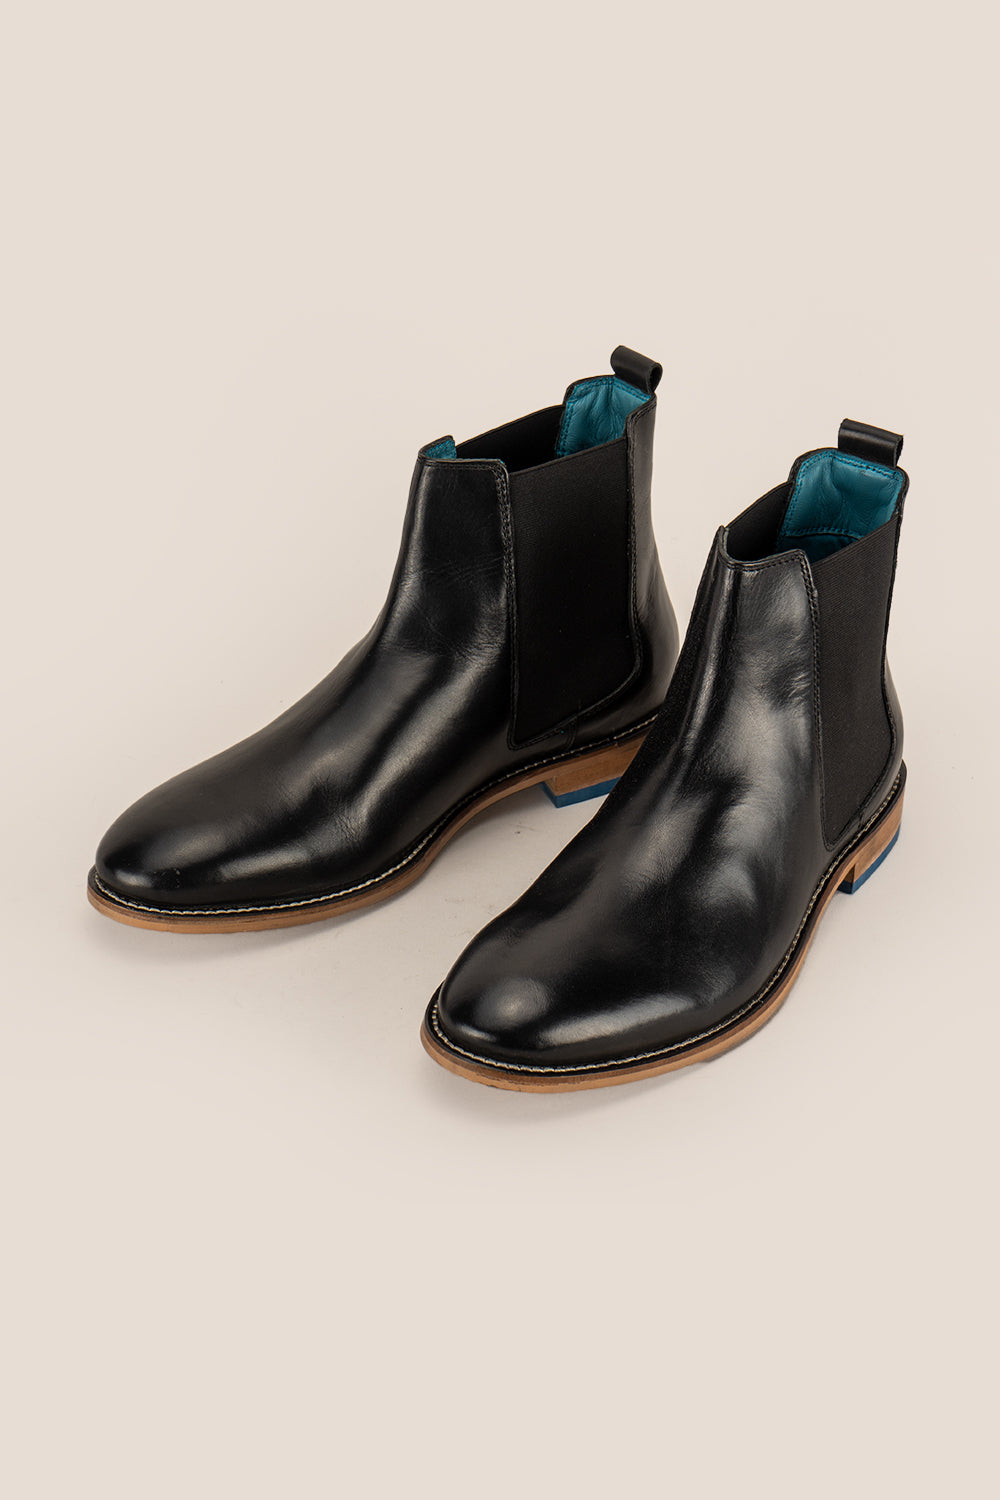 Douglas Black Leather Chelsea Boot | Oswin Hyde